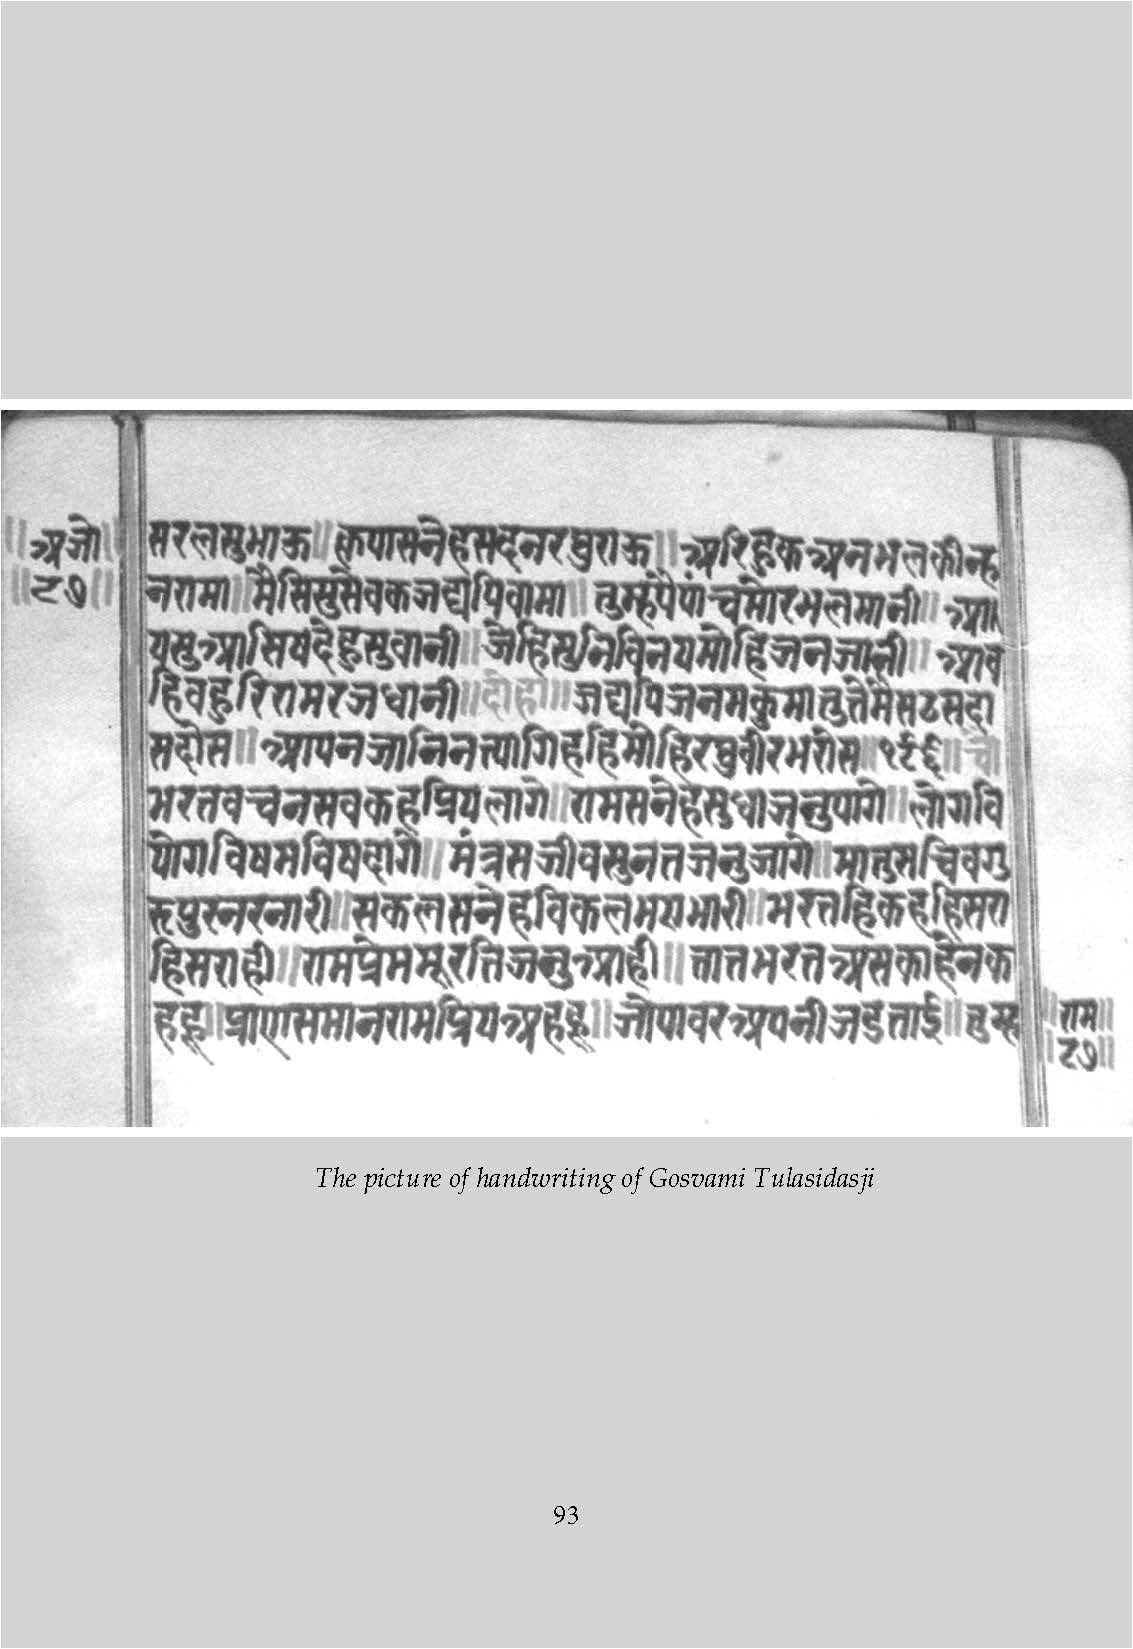 Gosvami Tulasidas - Love of Rama Personified